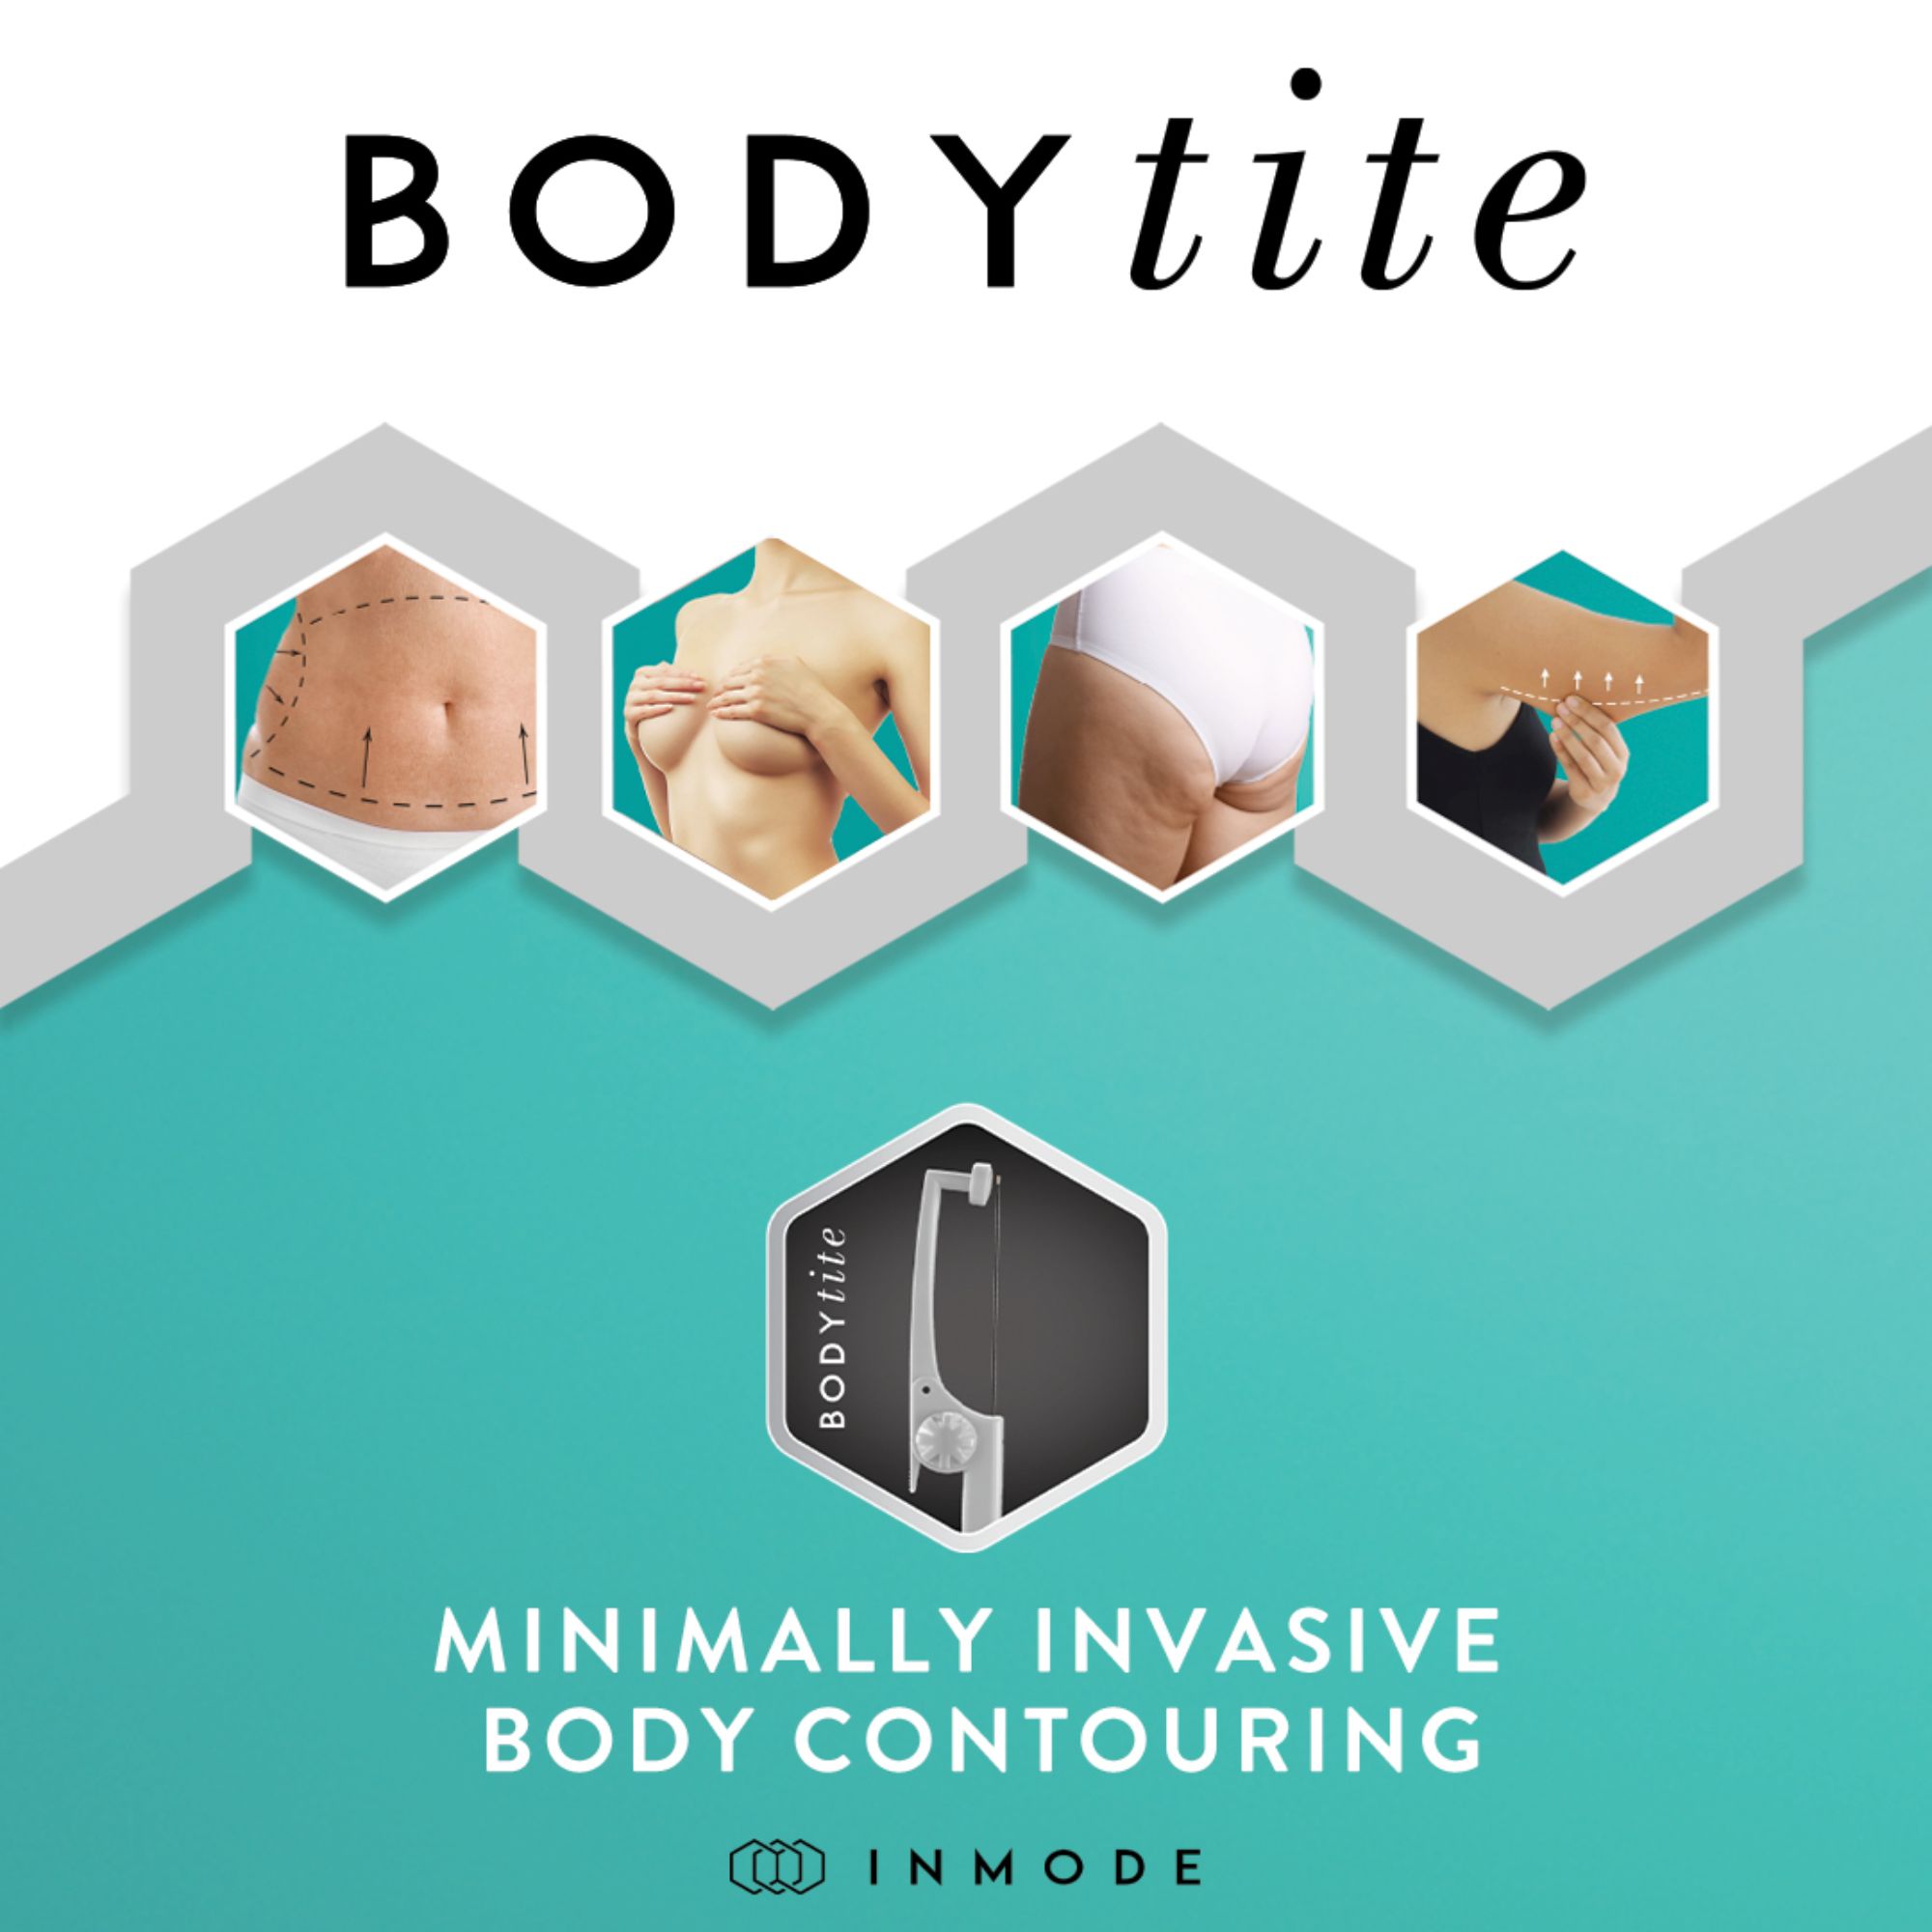 bodytite-treatment-area-instagram-post-preview-4